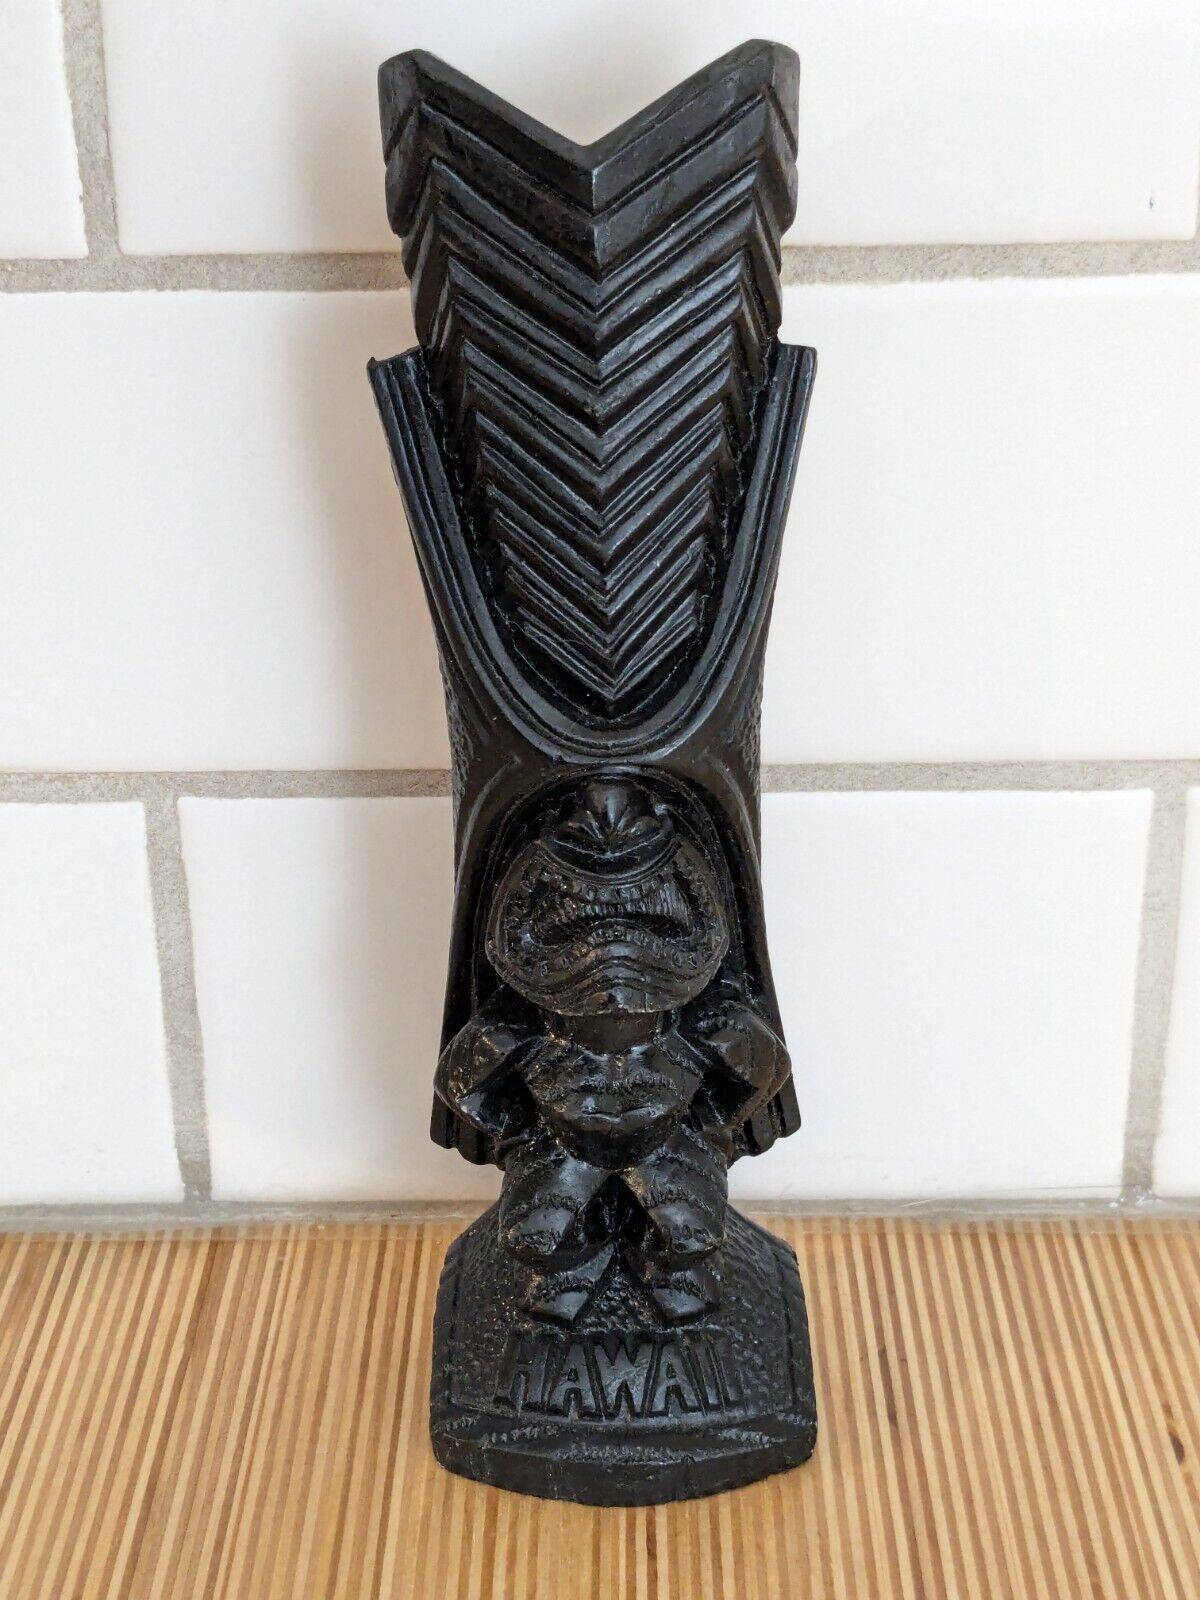 Coco Joe\'s Kanaloa Tiki Eternal God Hawaii Figurine Black Lava